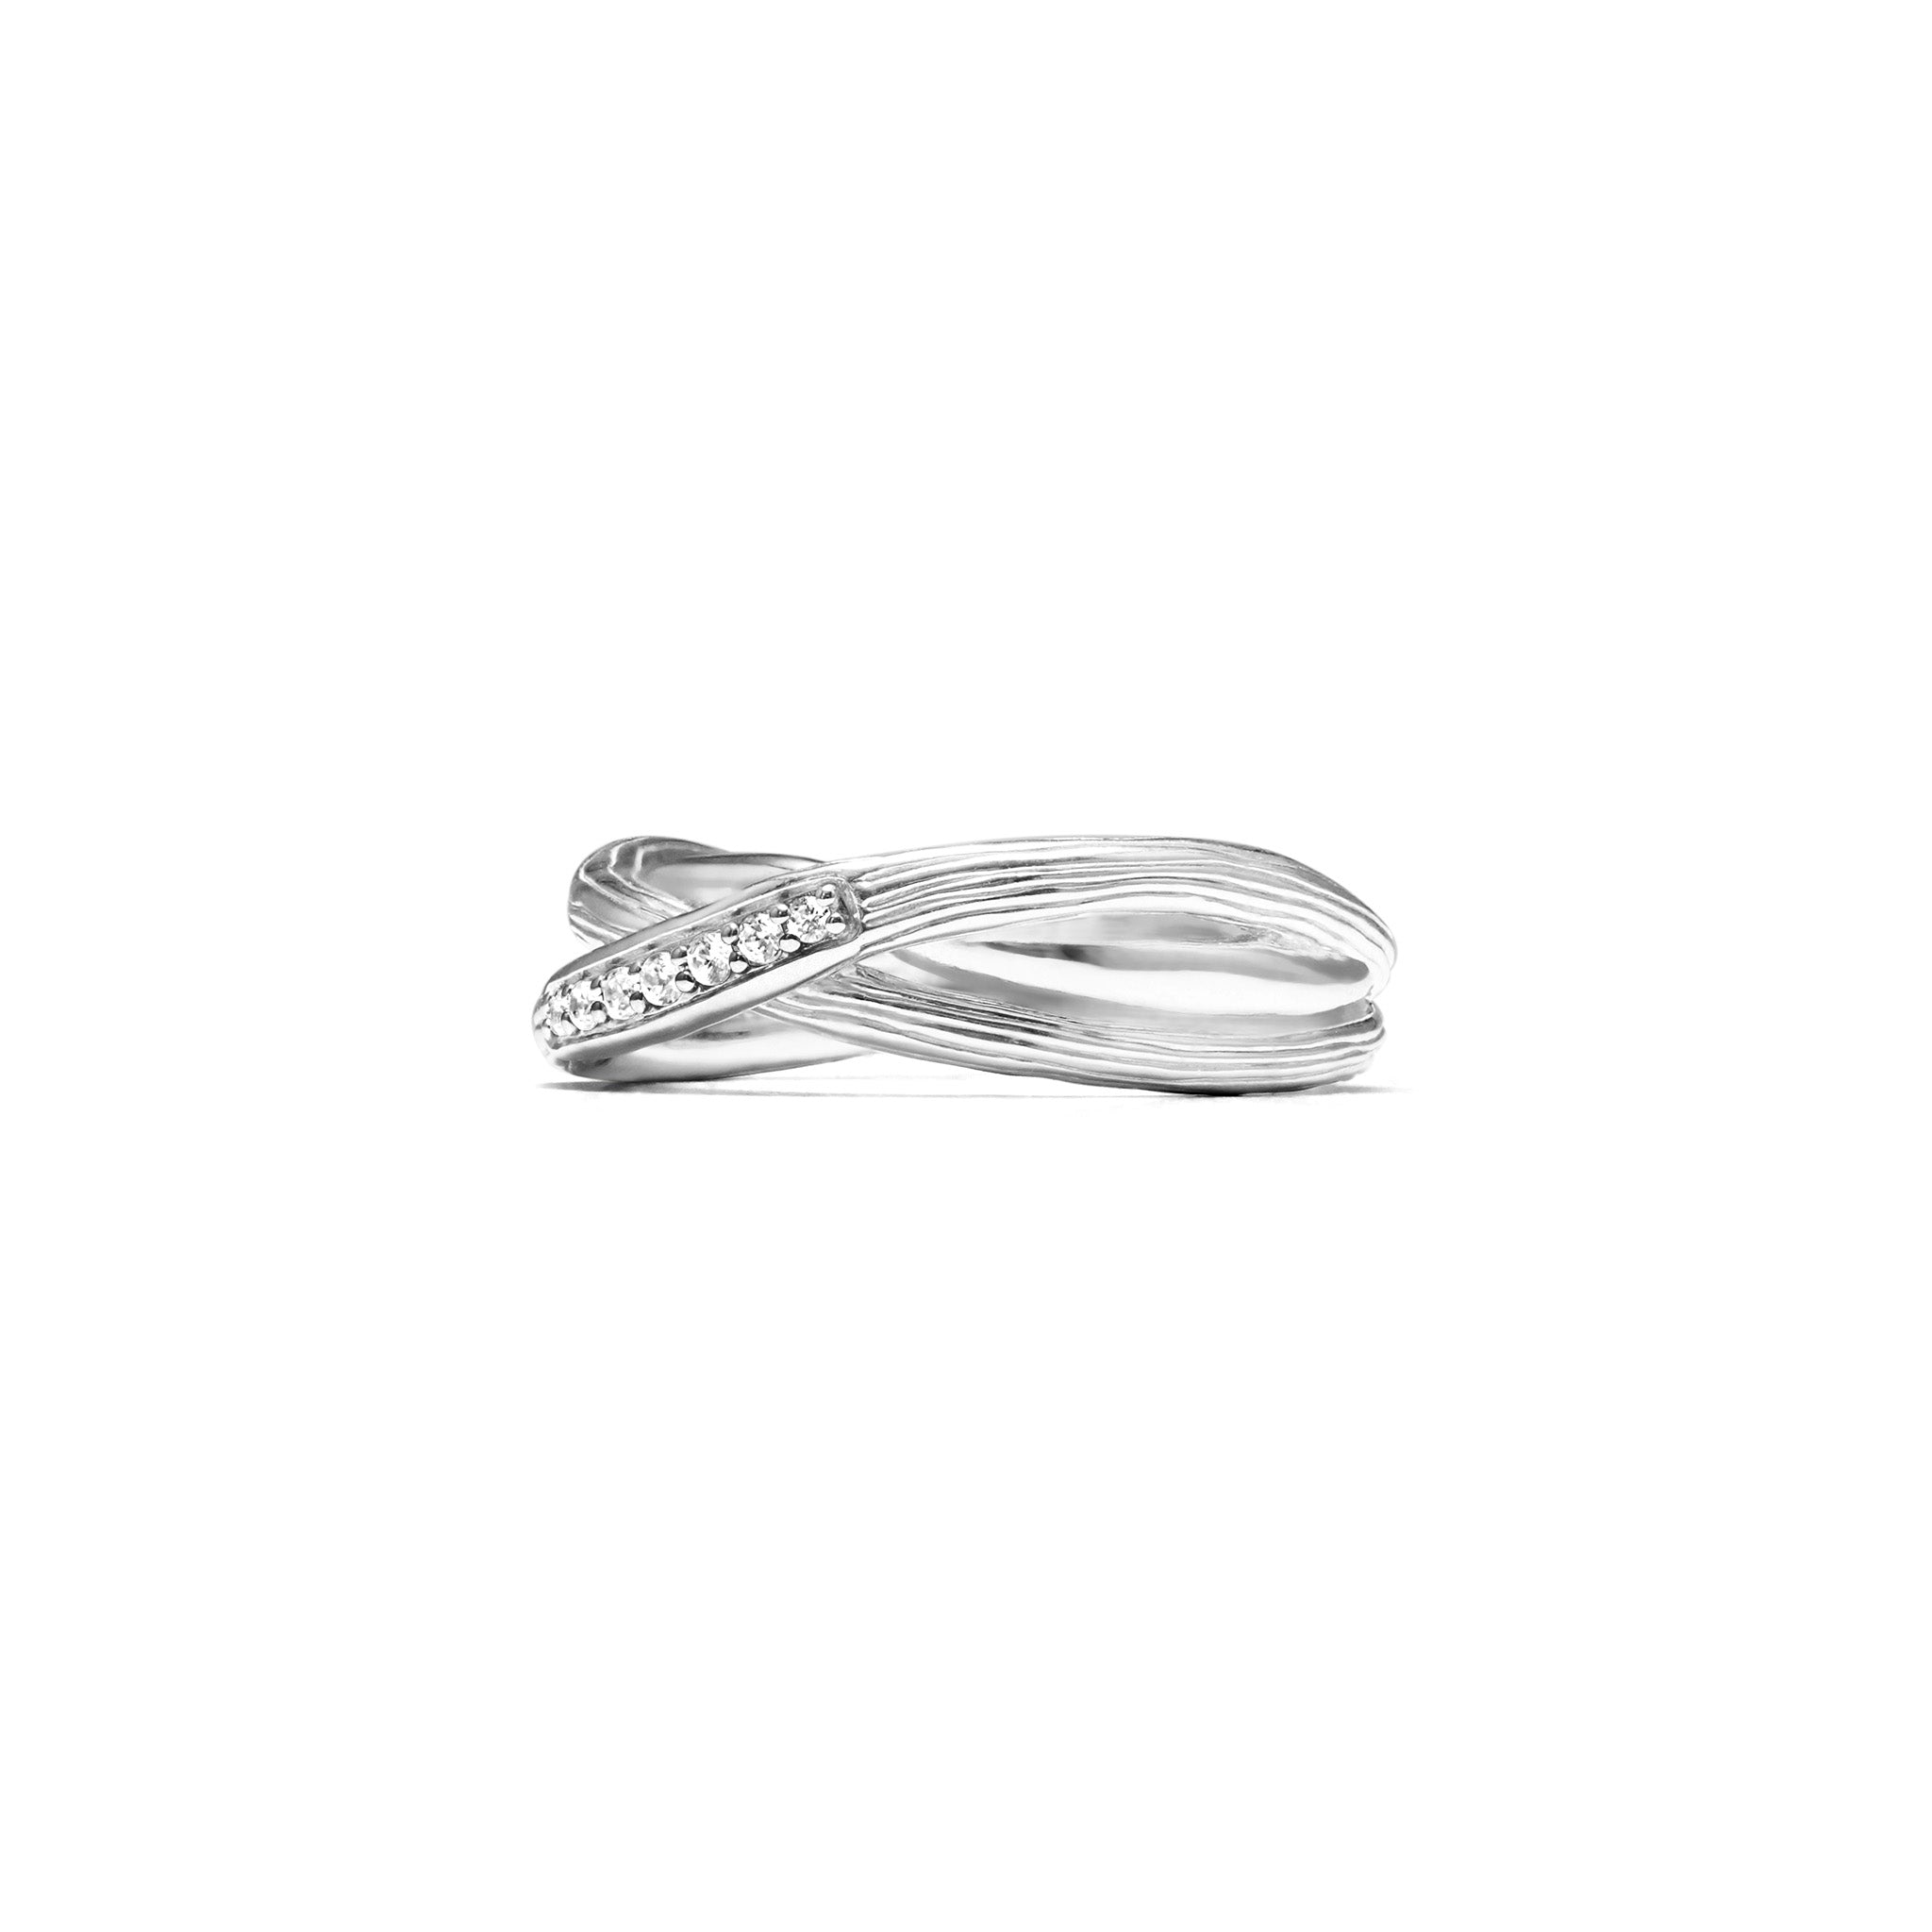 Santorini Crossover Ring with Diamonds